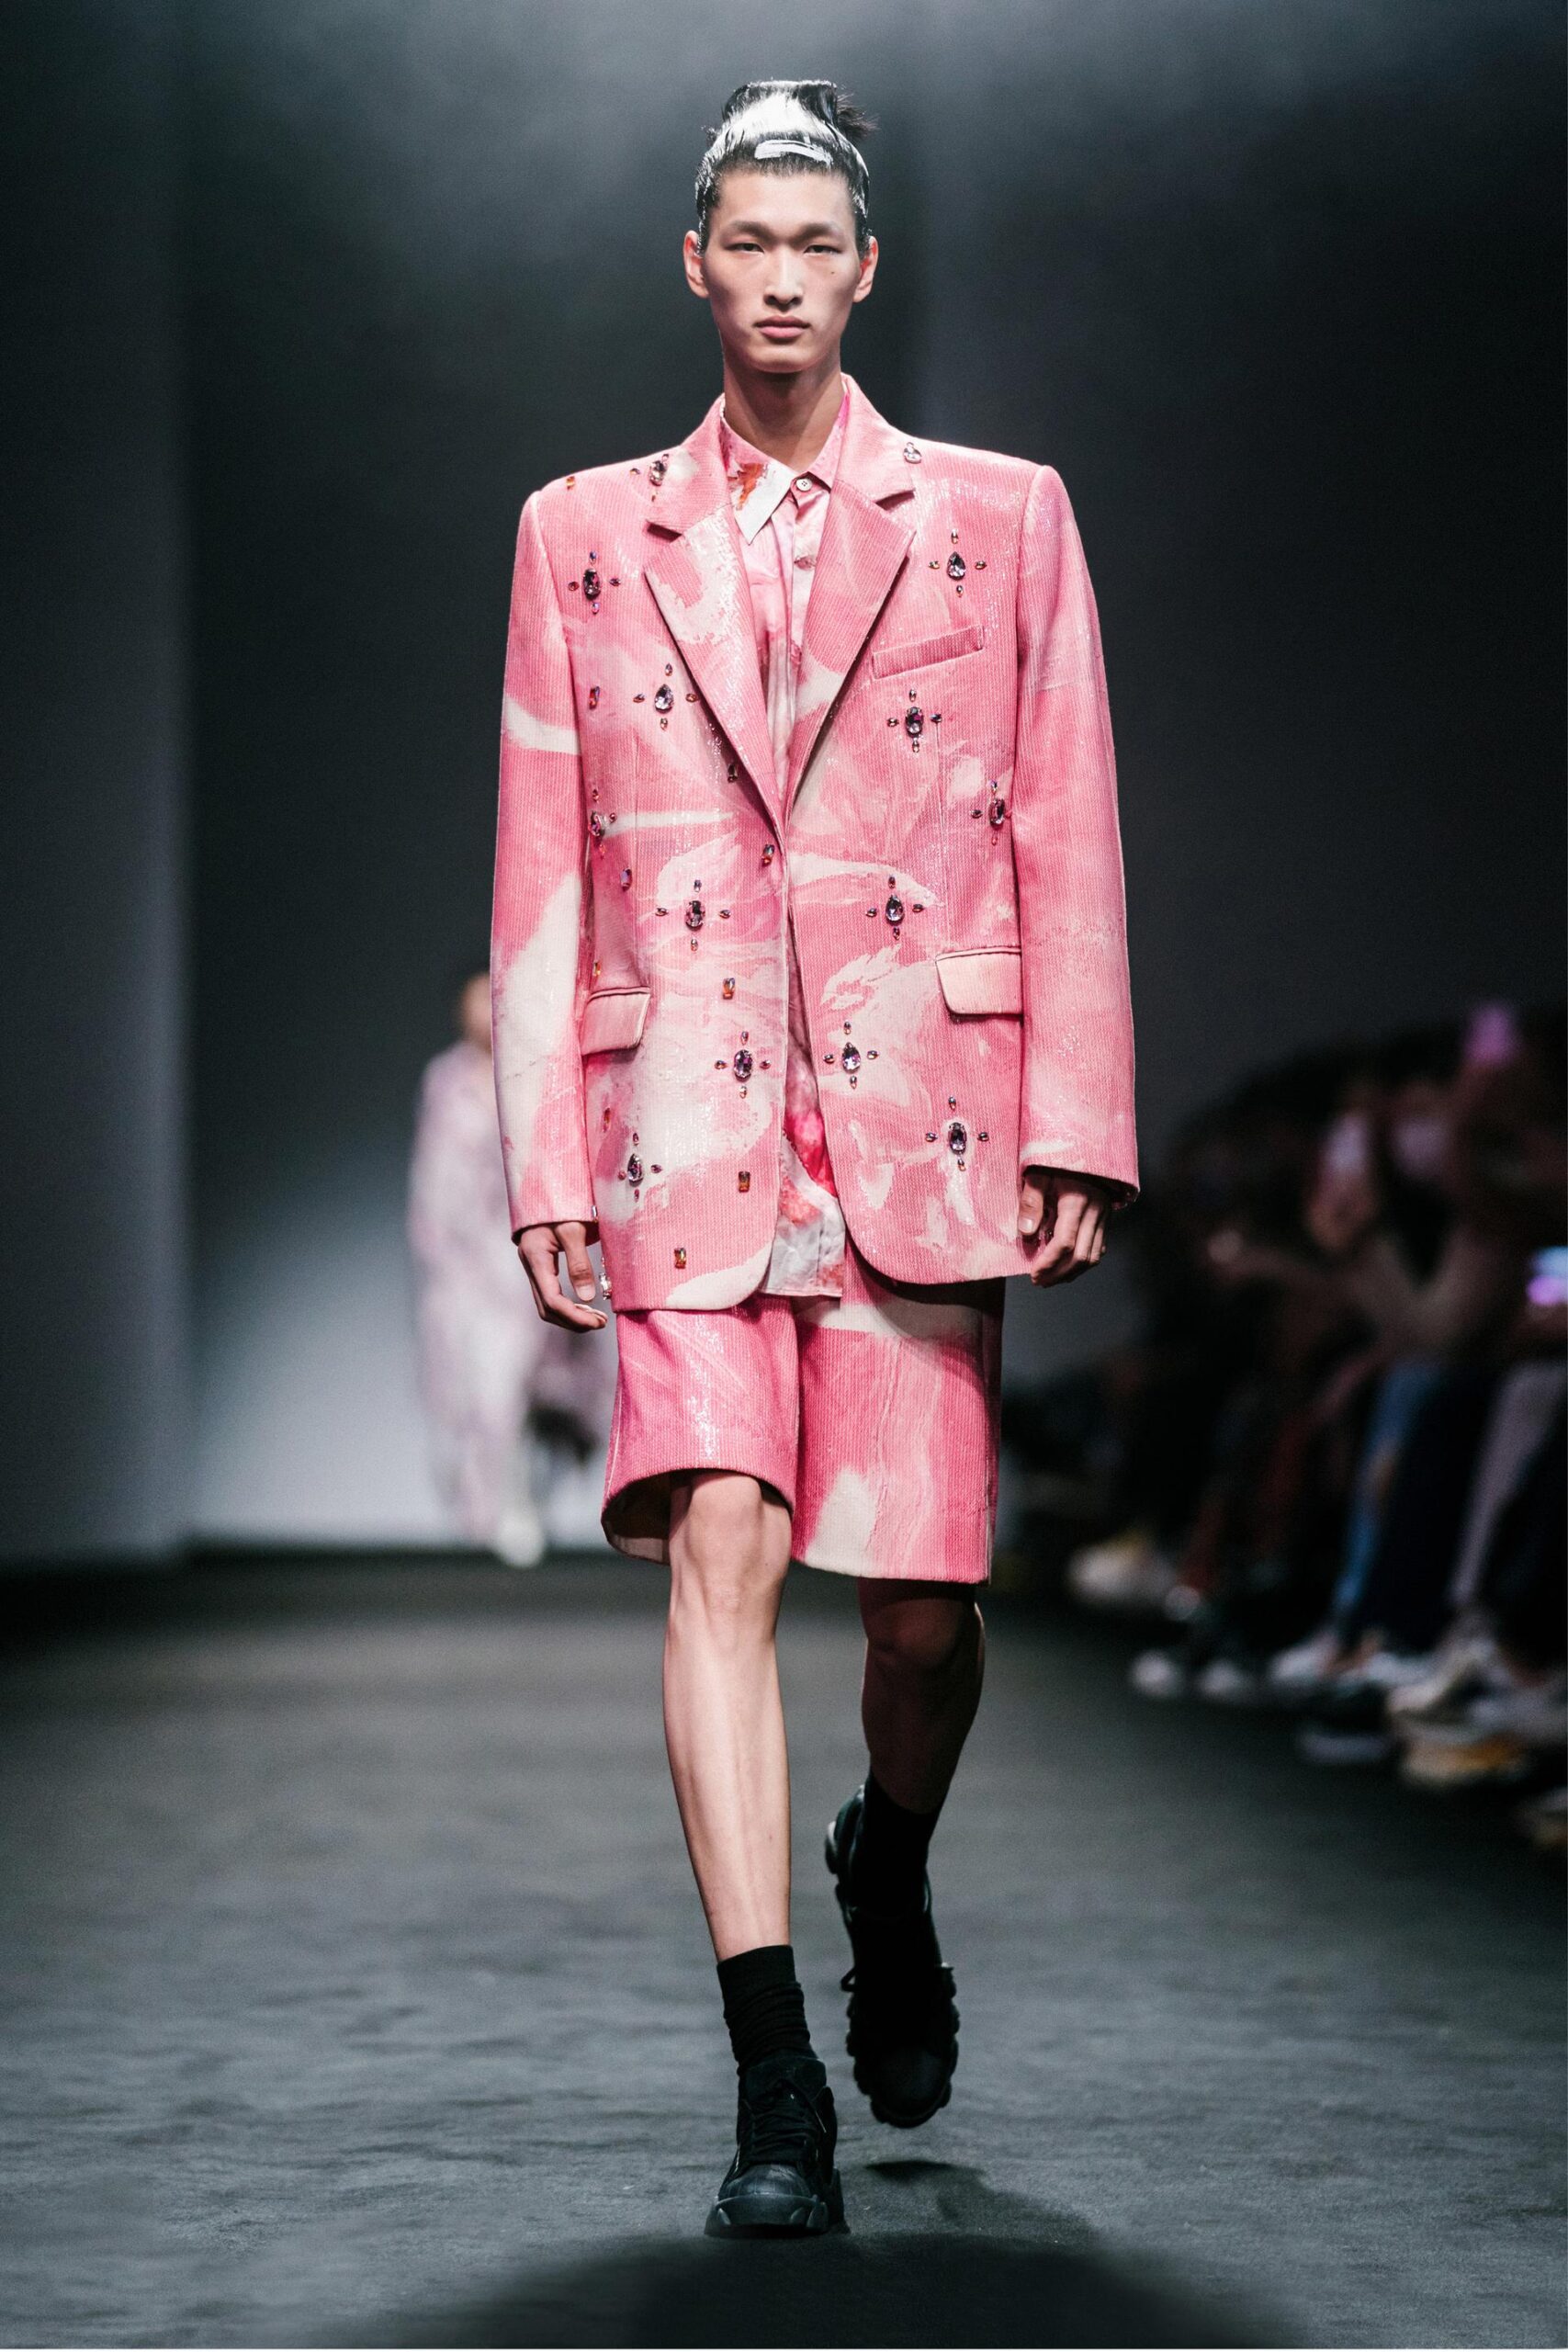 ANGEL CHEN | Shanghai Fashion Week - The Garnette Report